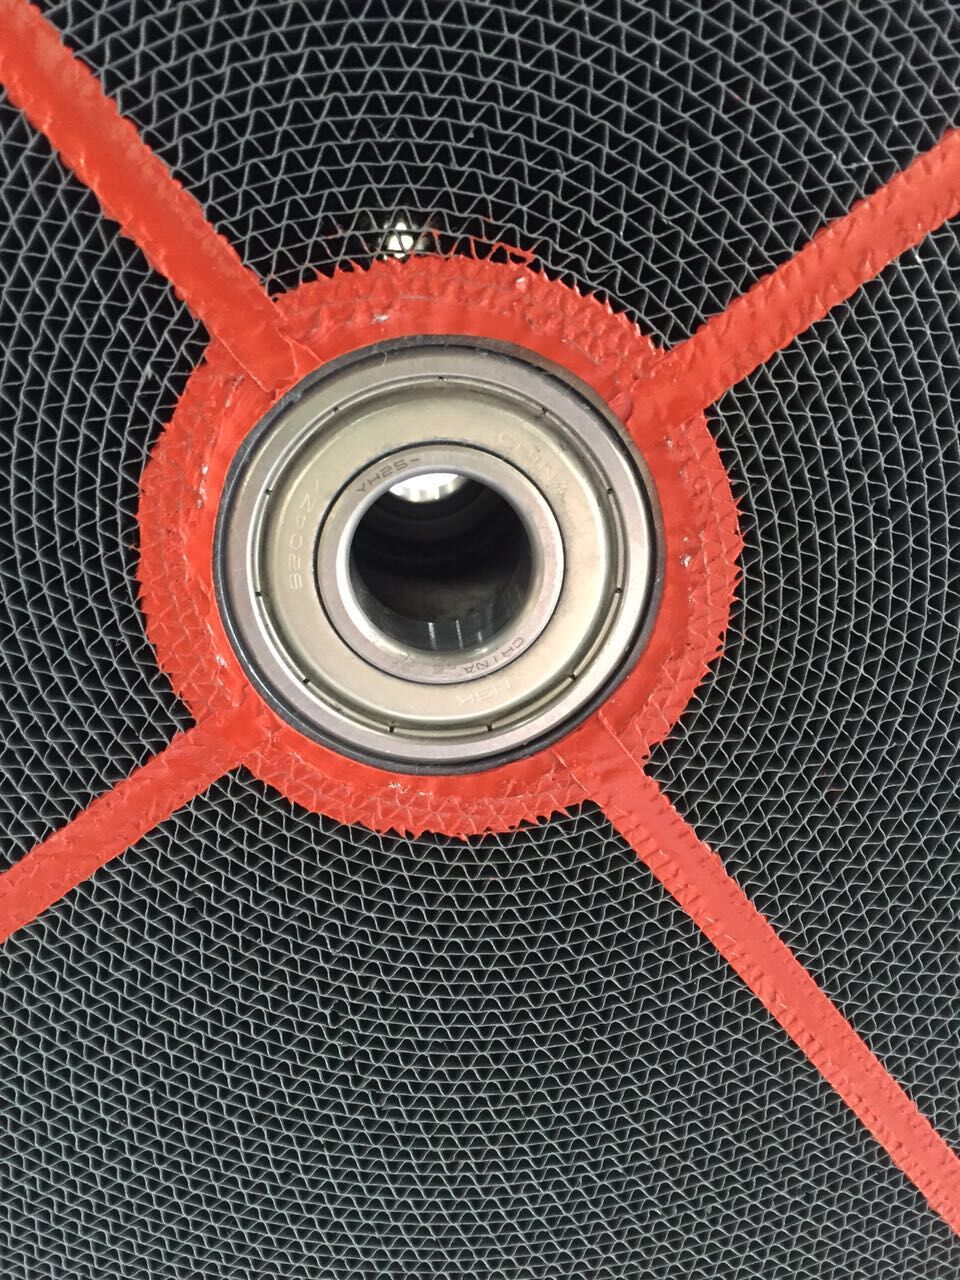 deshumidificador portátil de rotor desecante para sótano 2190 * 300 mm